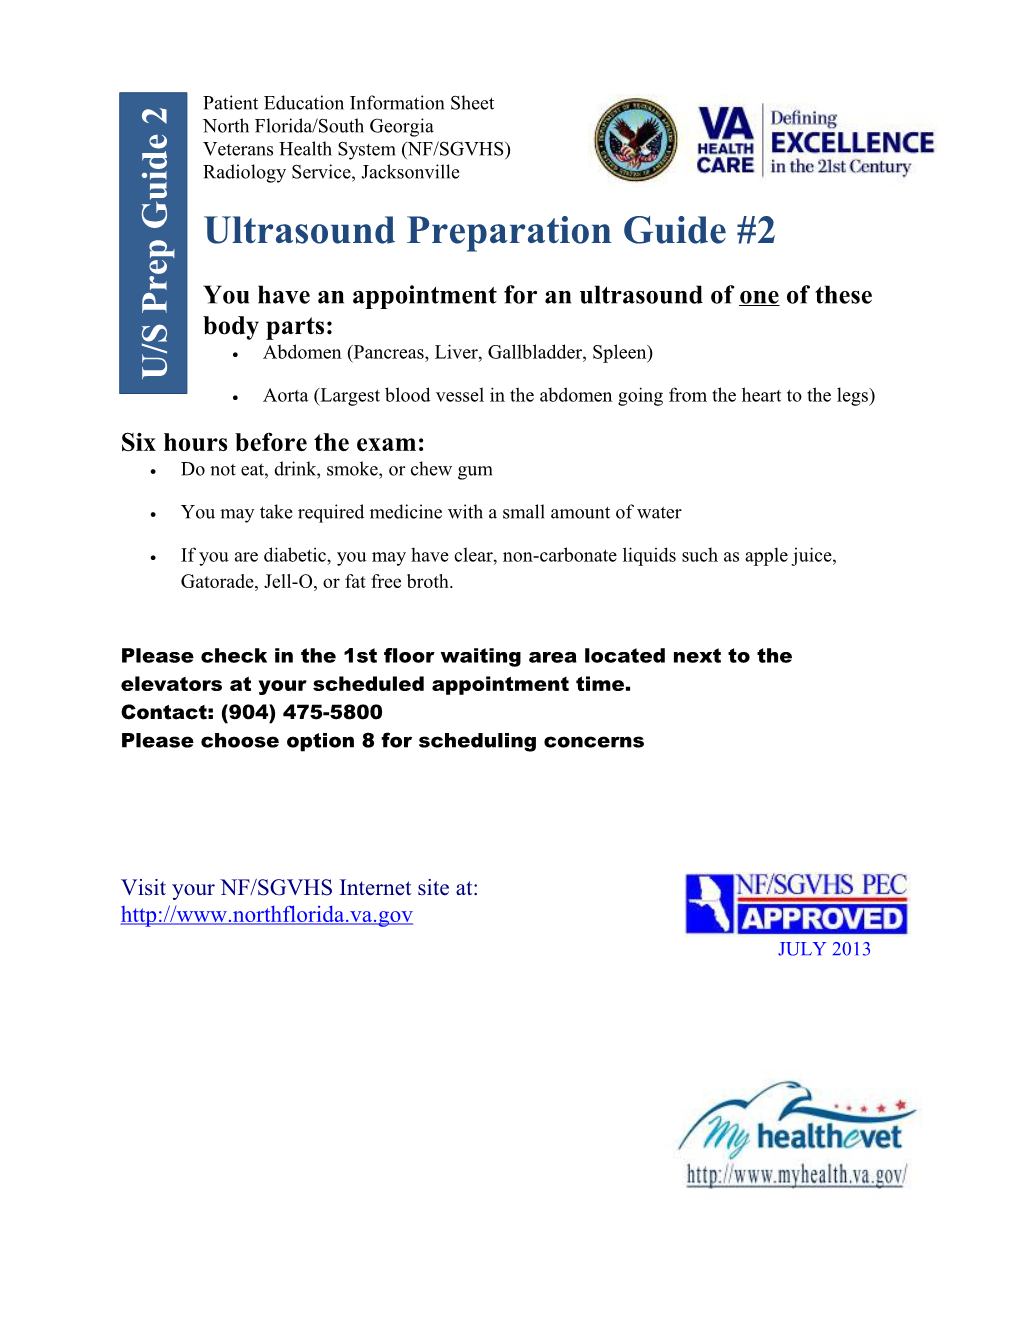 Ultrasound Preparation Guide #2